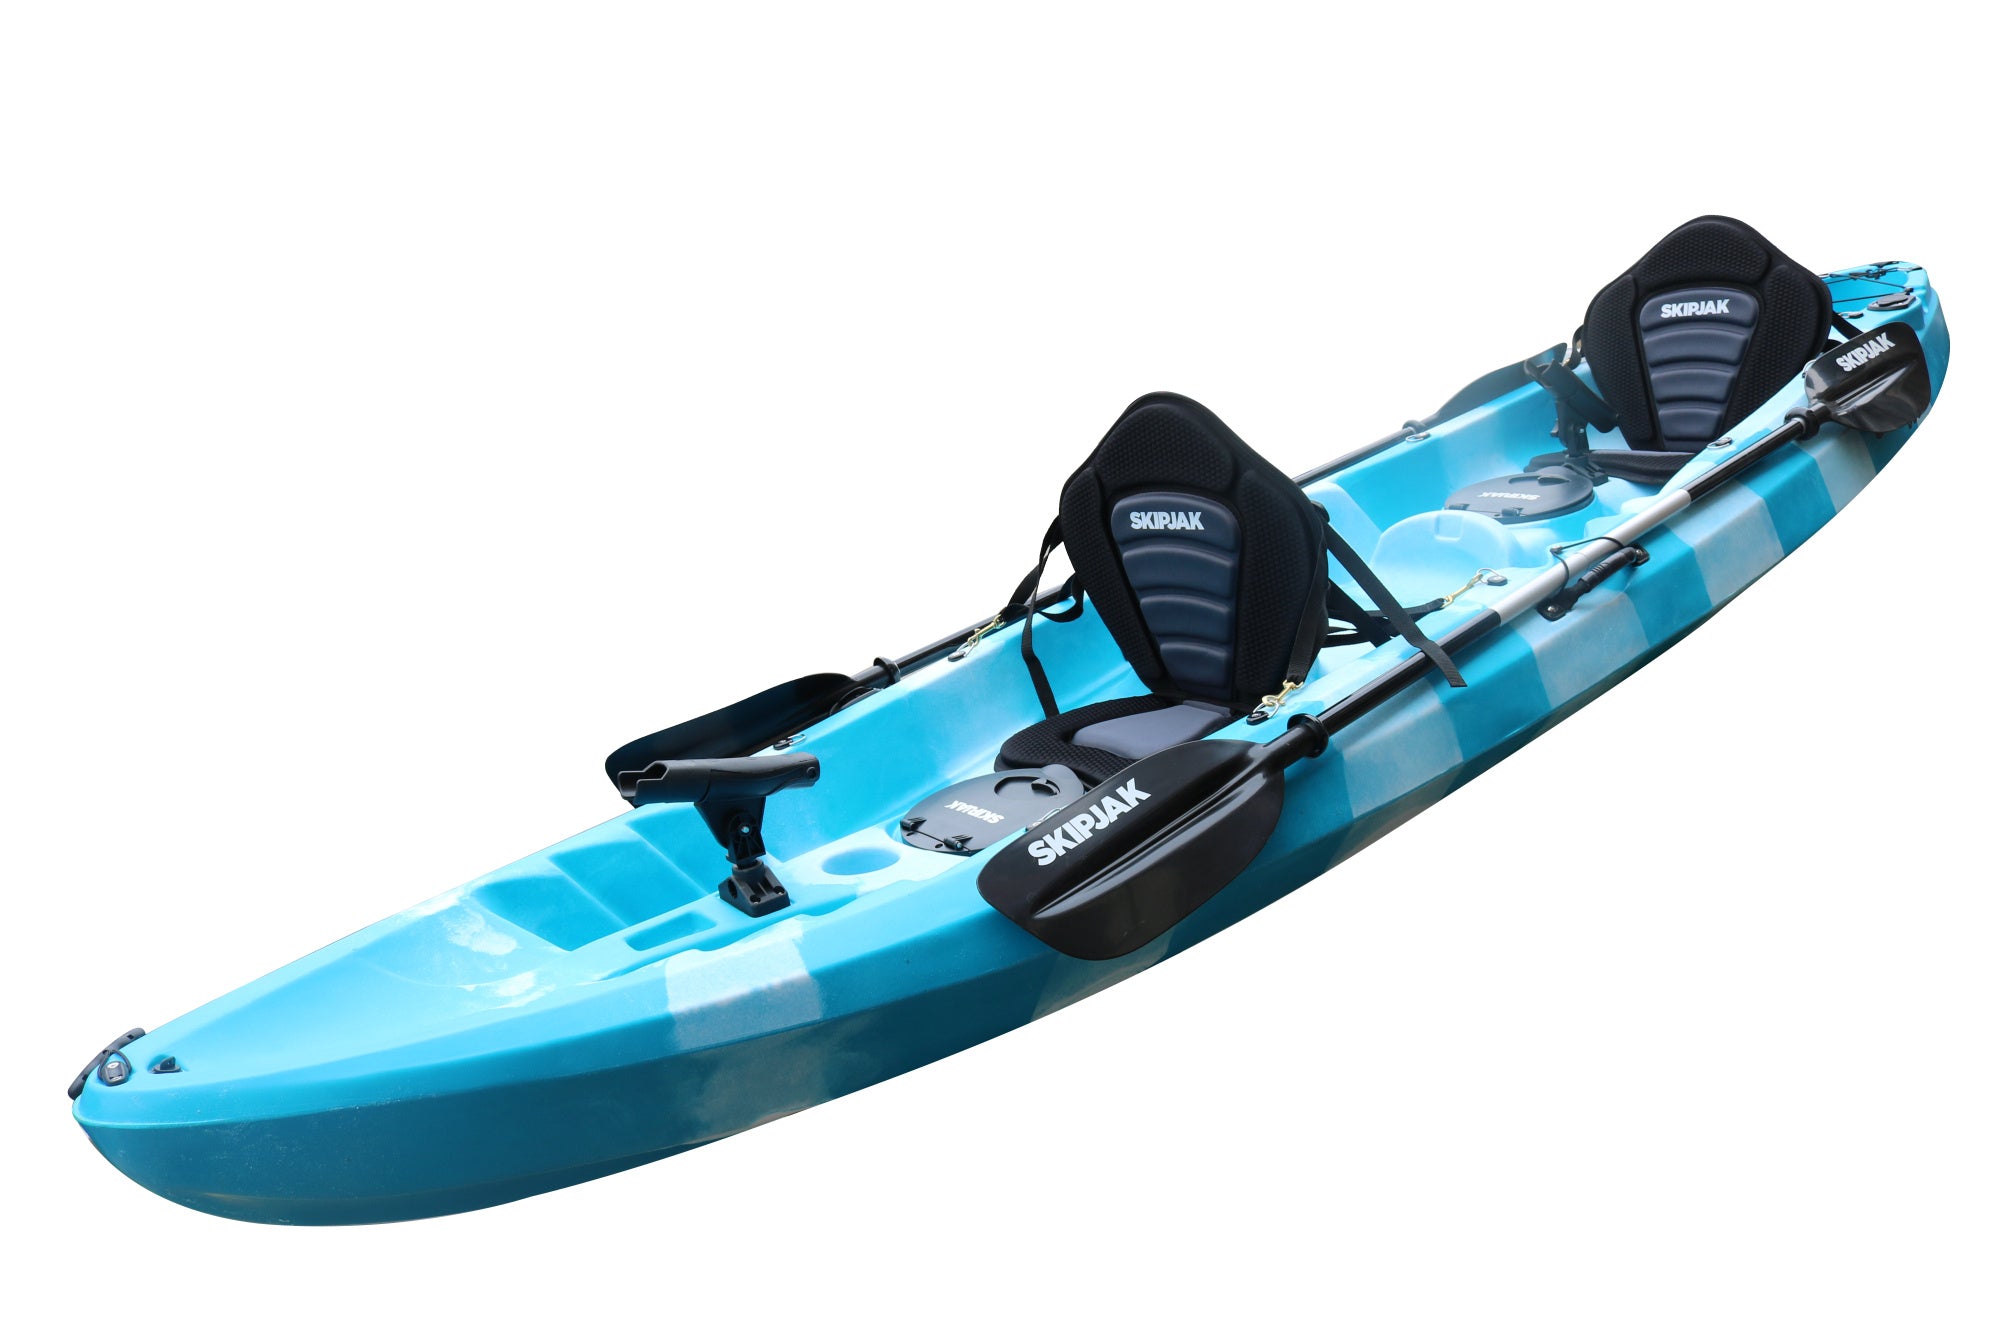 The SkipJak DUO - Tandem Two person and Family Kayak Lake Land Kayaks Ocean Blue White 